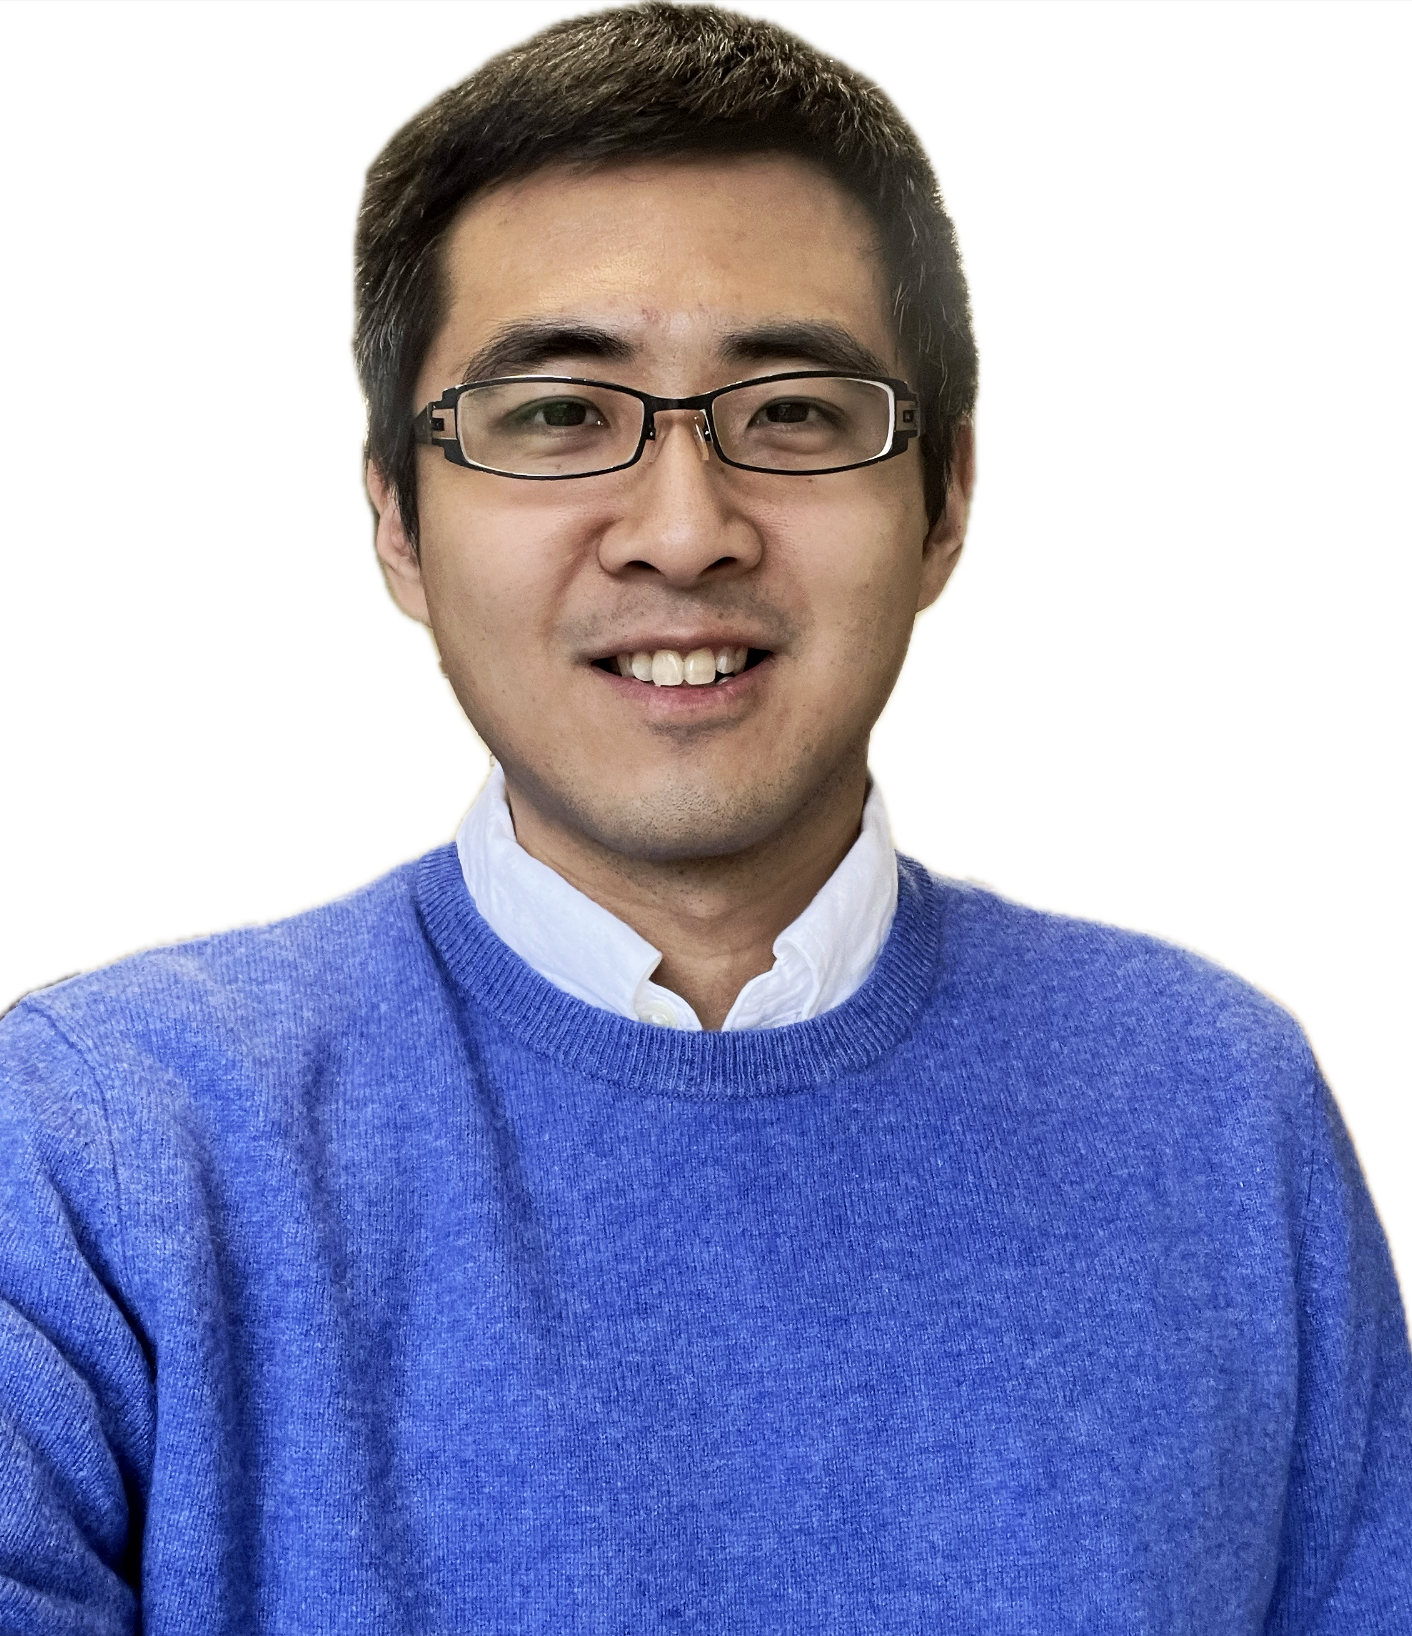 Jason Xinyu Liu headshot with a white background